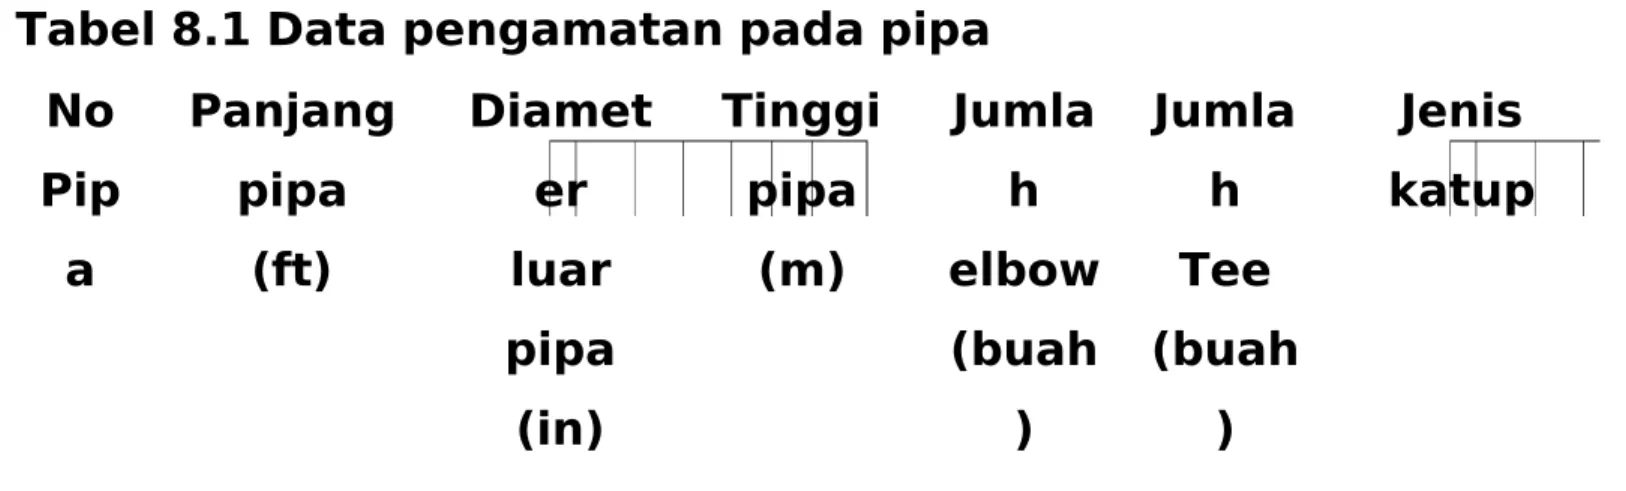 Tabel 8.1 Data pengamatan pada pipa No Pip a Panjangpipa(ft) Diameterluar pipa (in) Tinggipipa(m)  Jumlah elbow(buah)  JumlahTee (buah)  Jenis katup